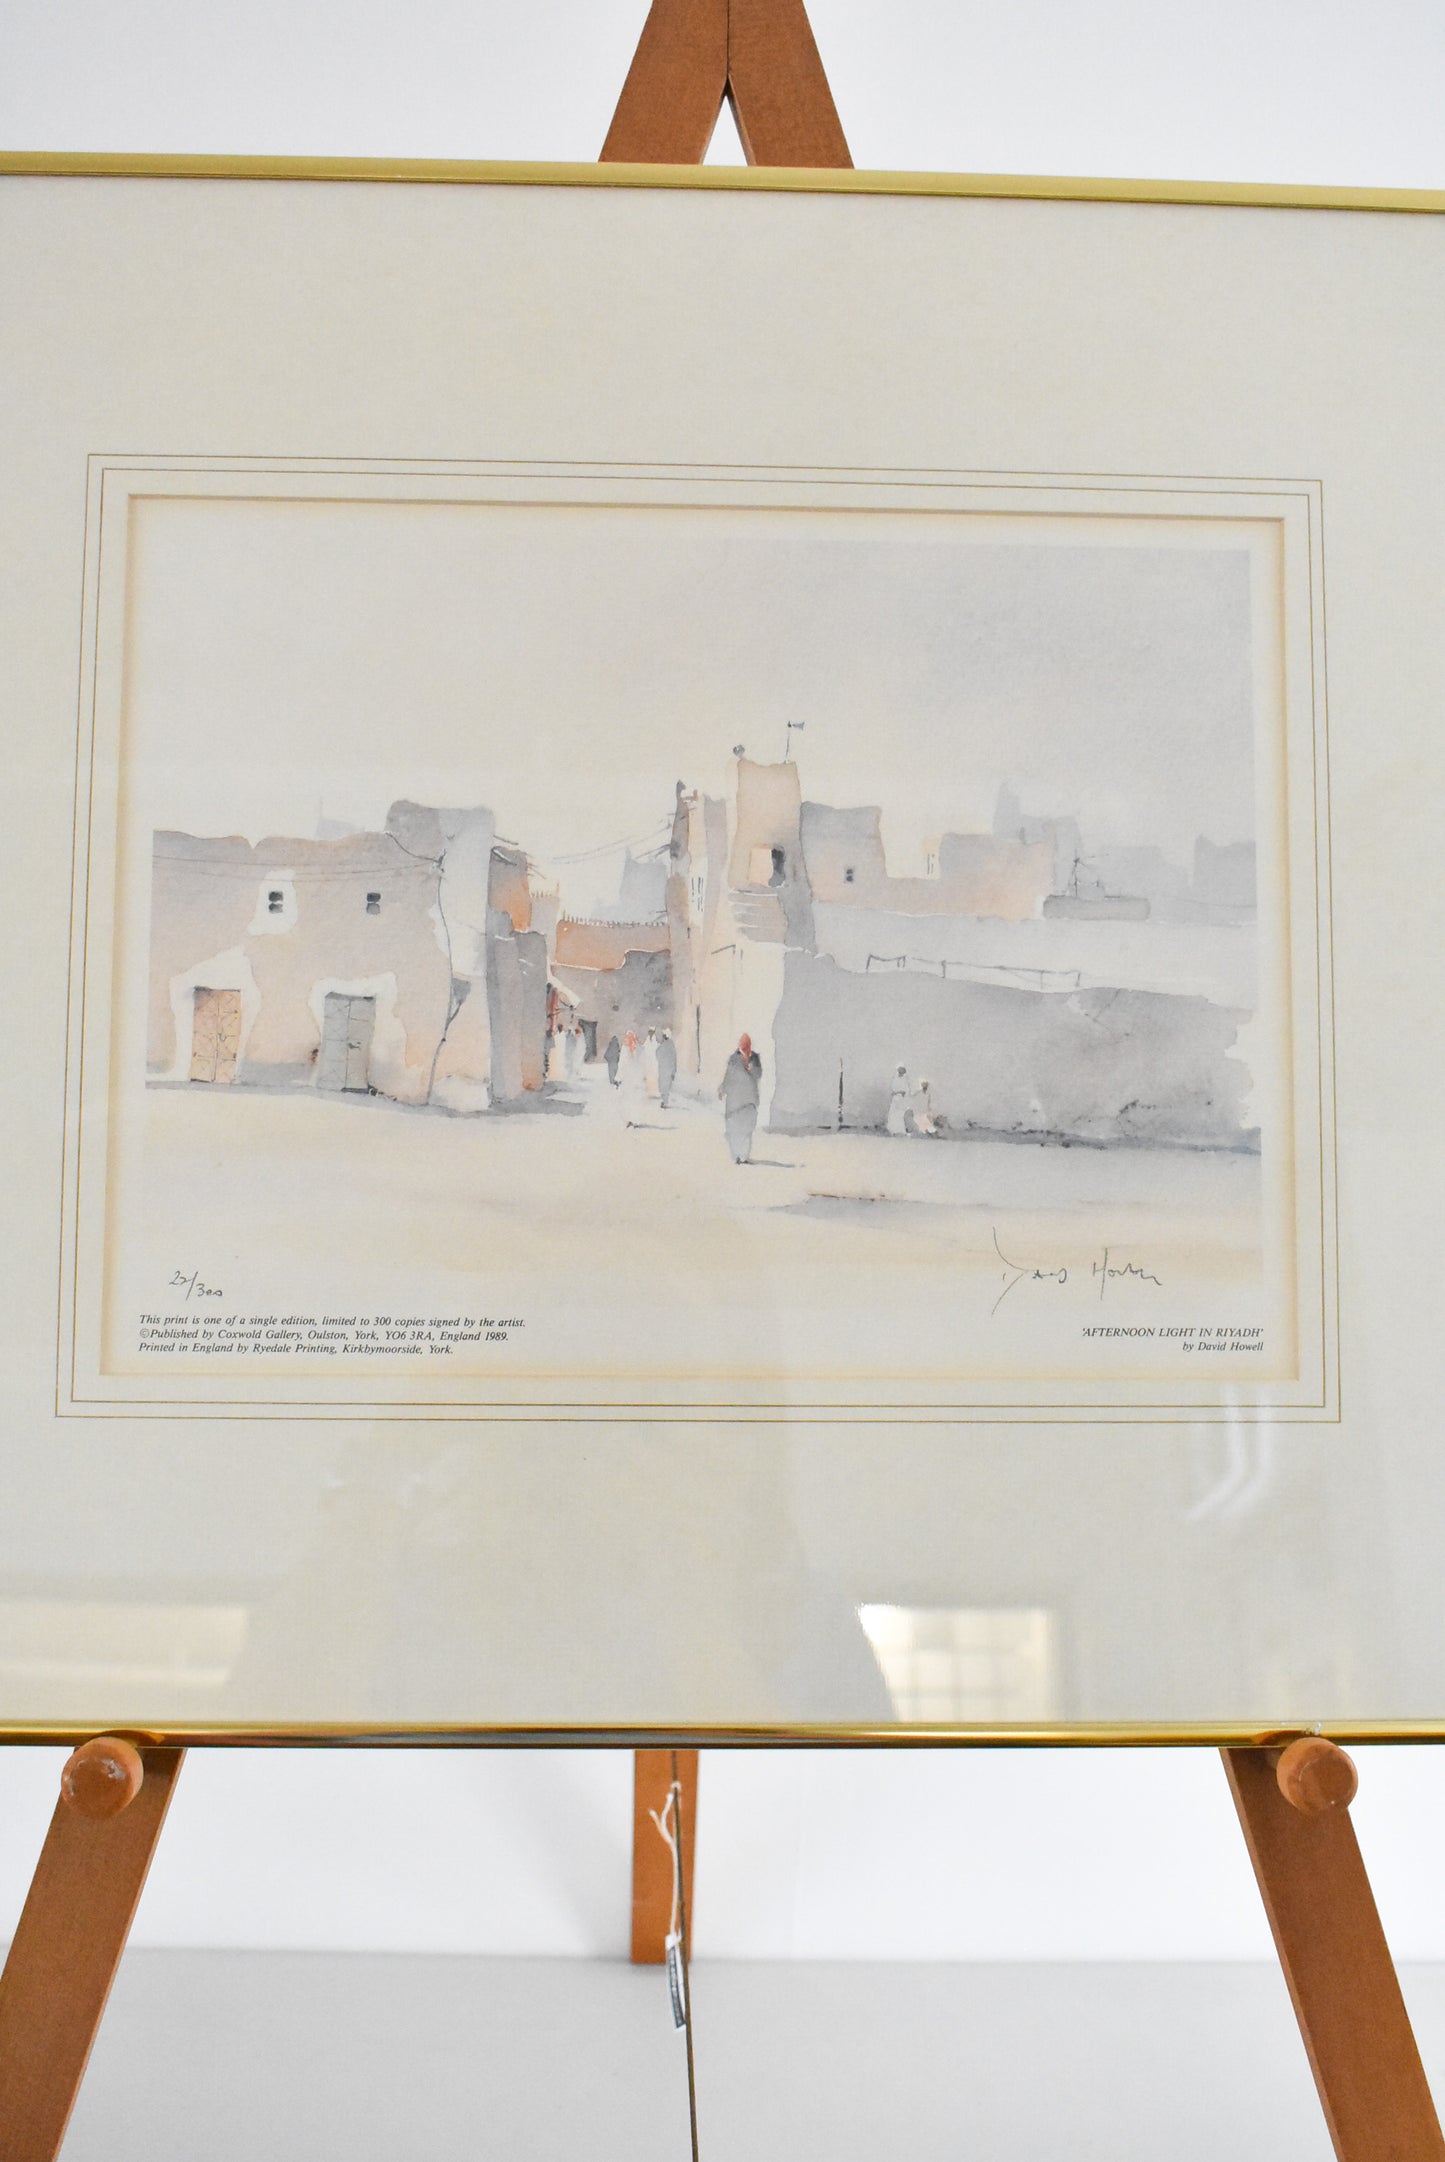 David Howell "Afternoon Light in Riyadh" limited addition print